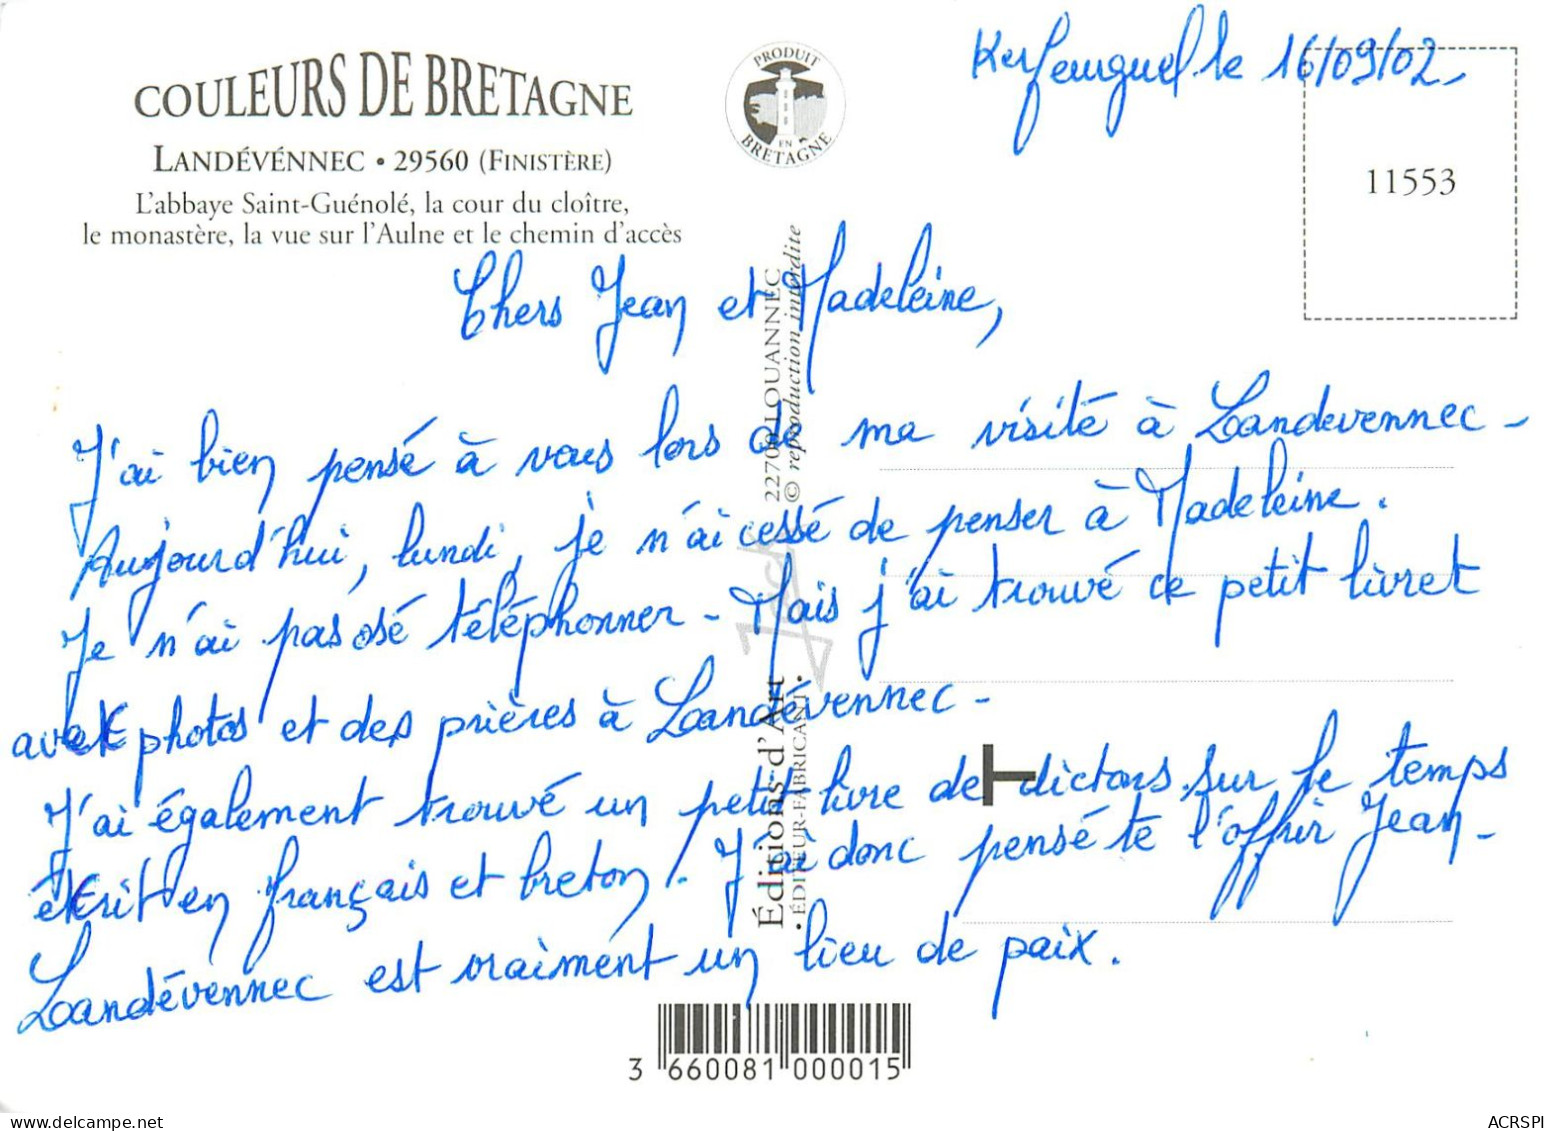 Landevennec, Abbaye Saint Guenole (scan Recto-verso) KEVREN0004 - Landévennec